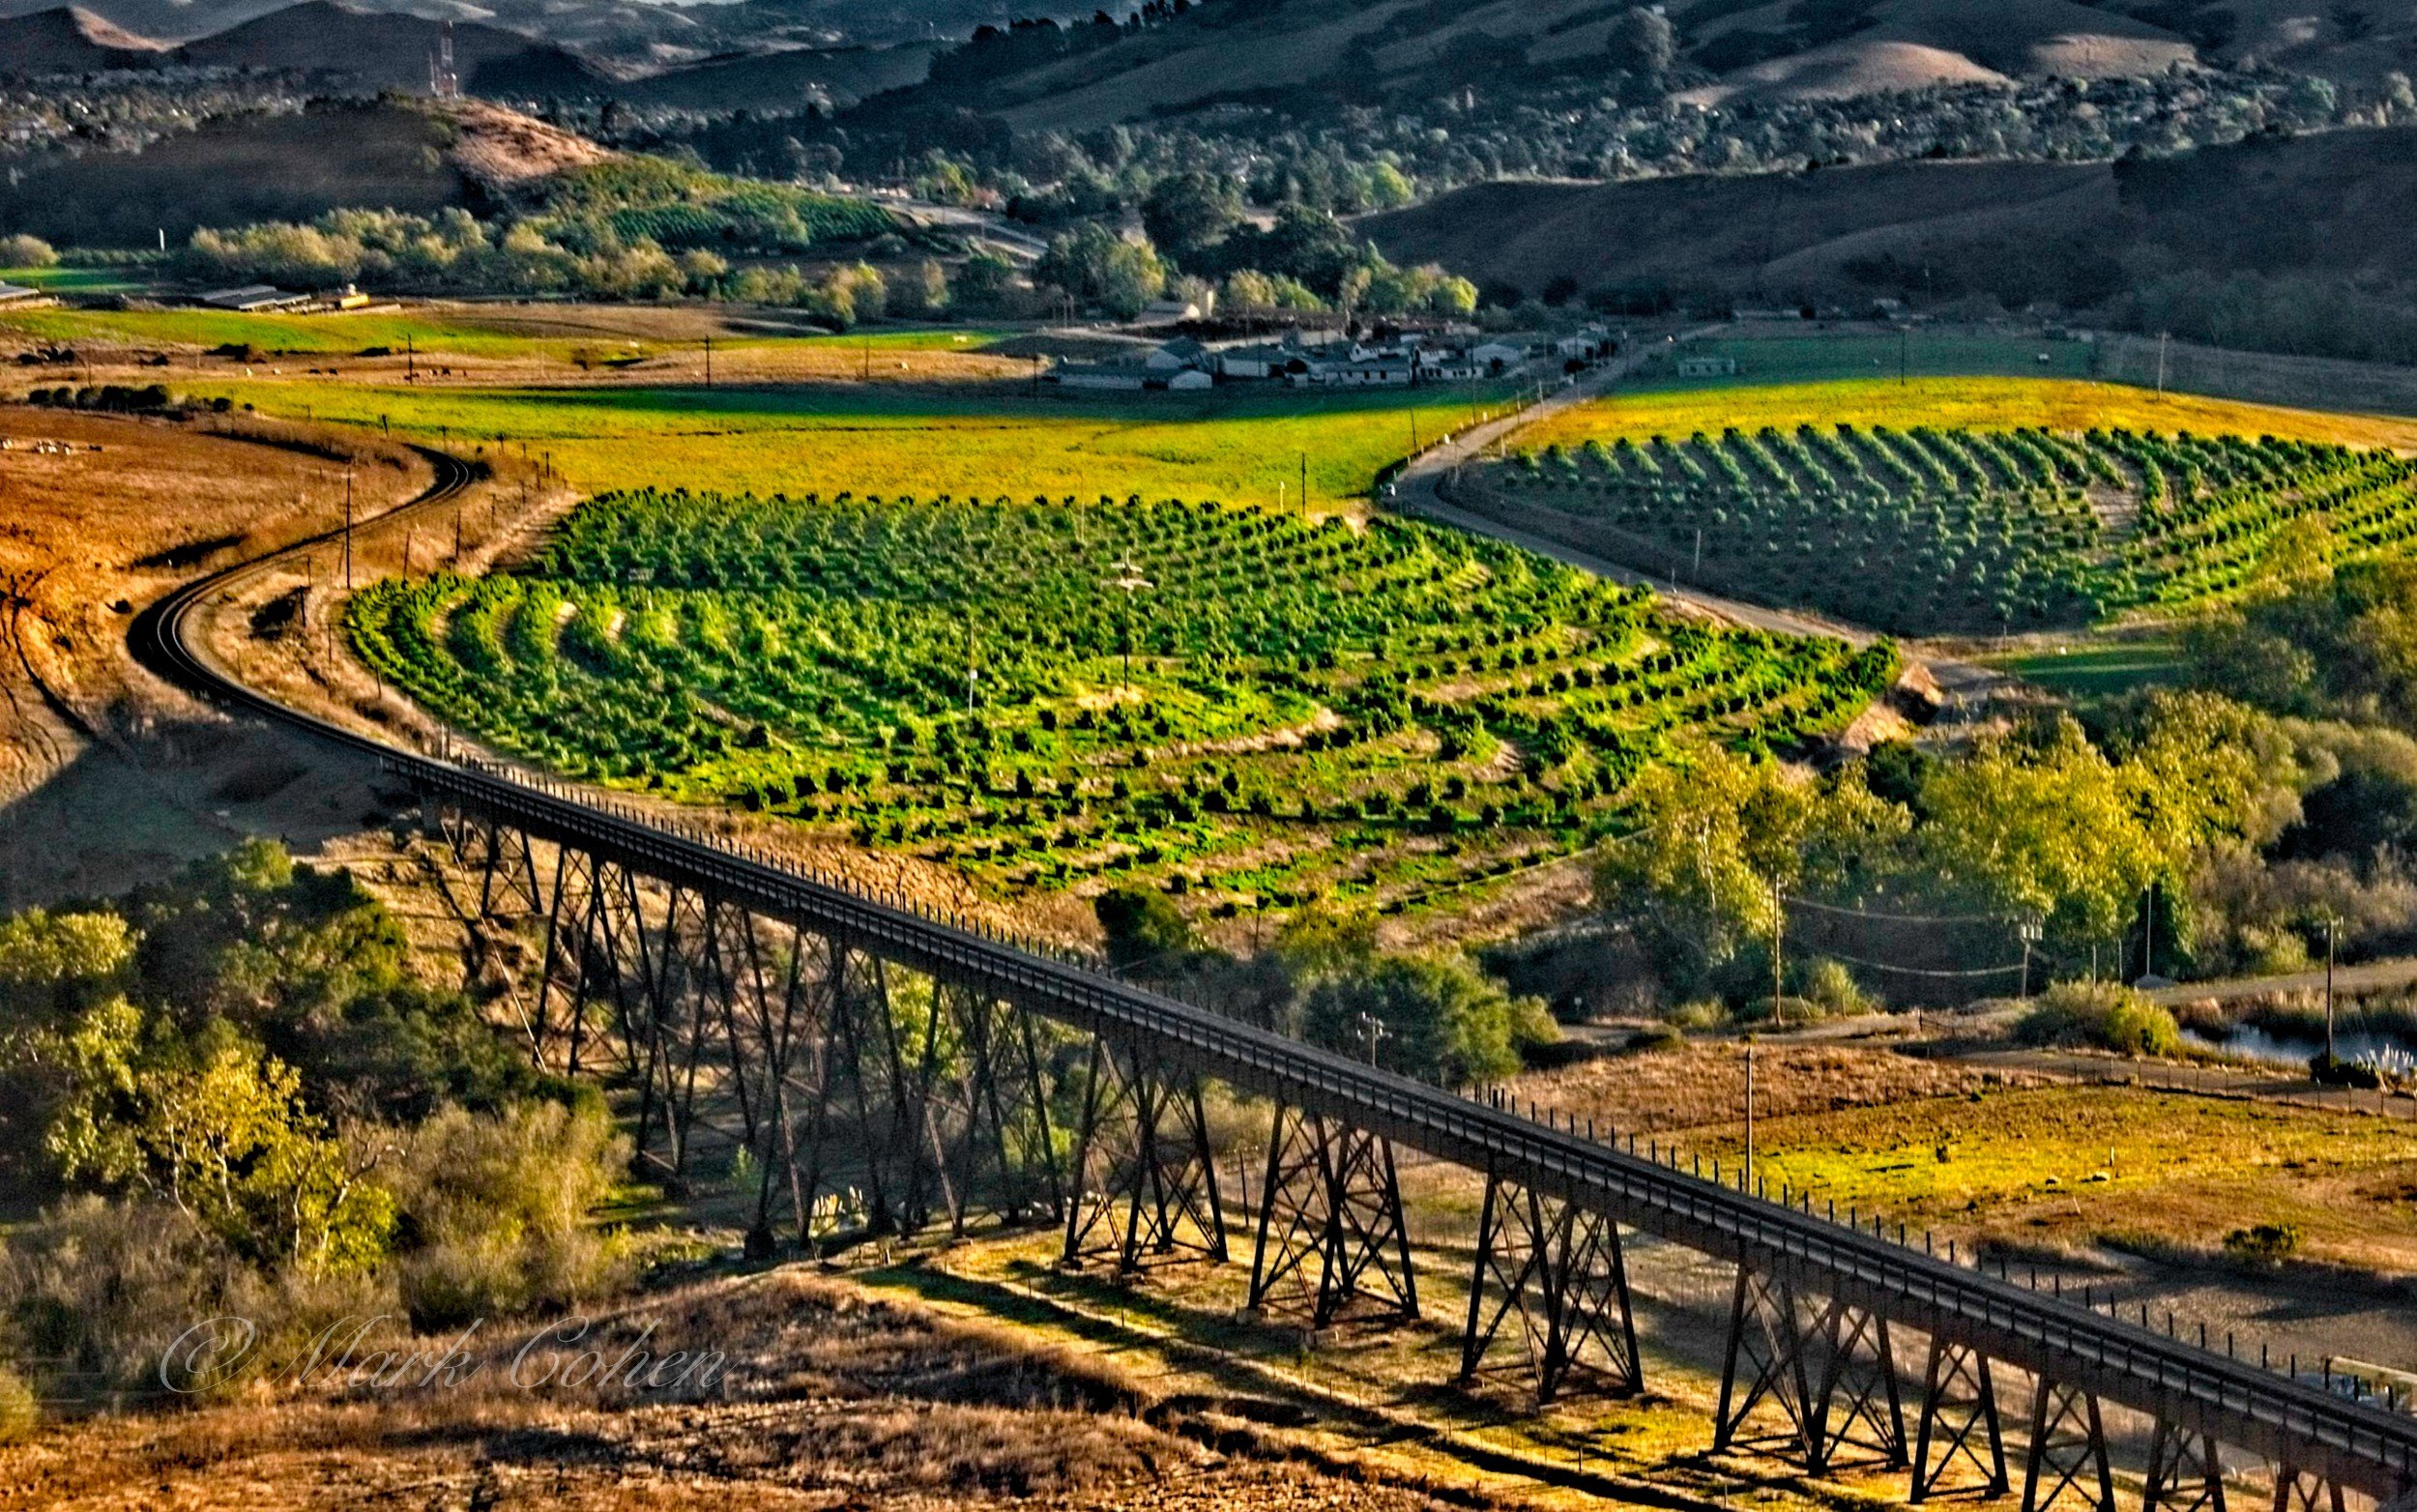 Tracks and vineyards, California  2005.jpg